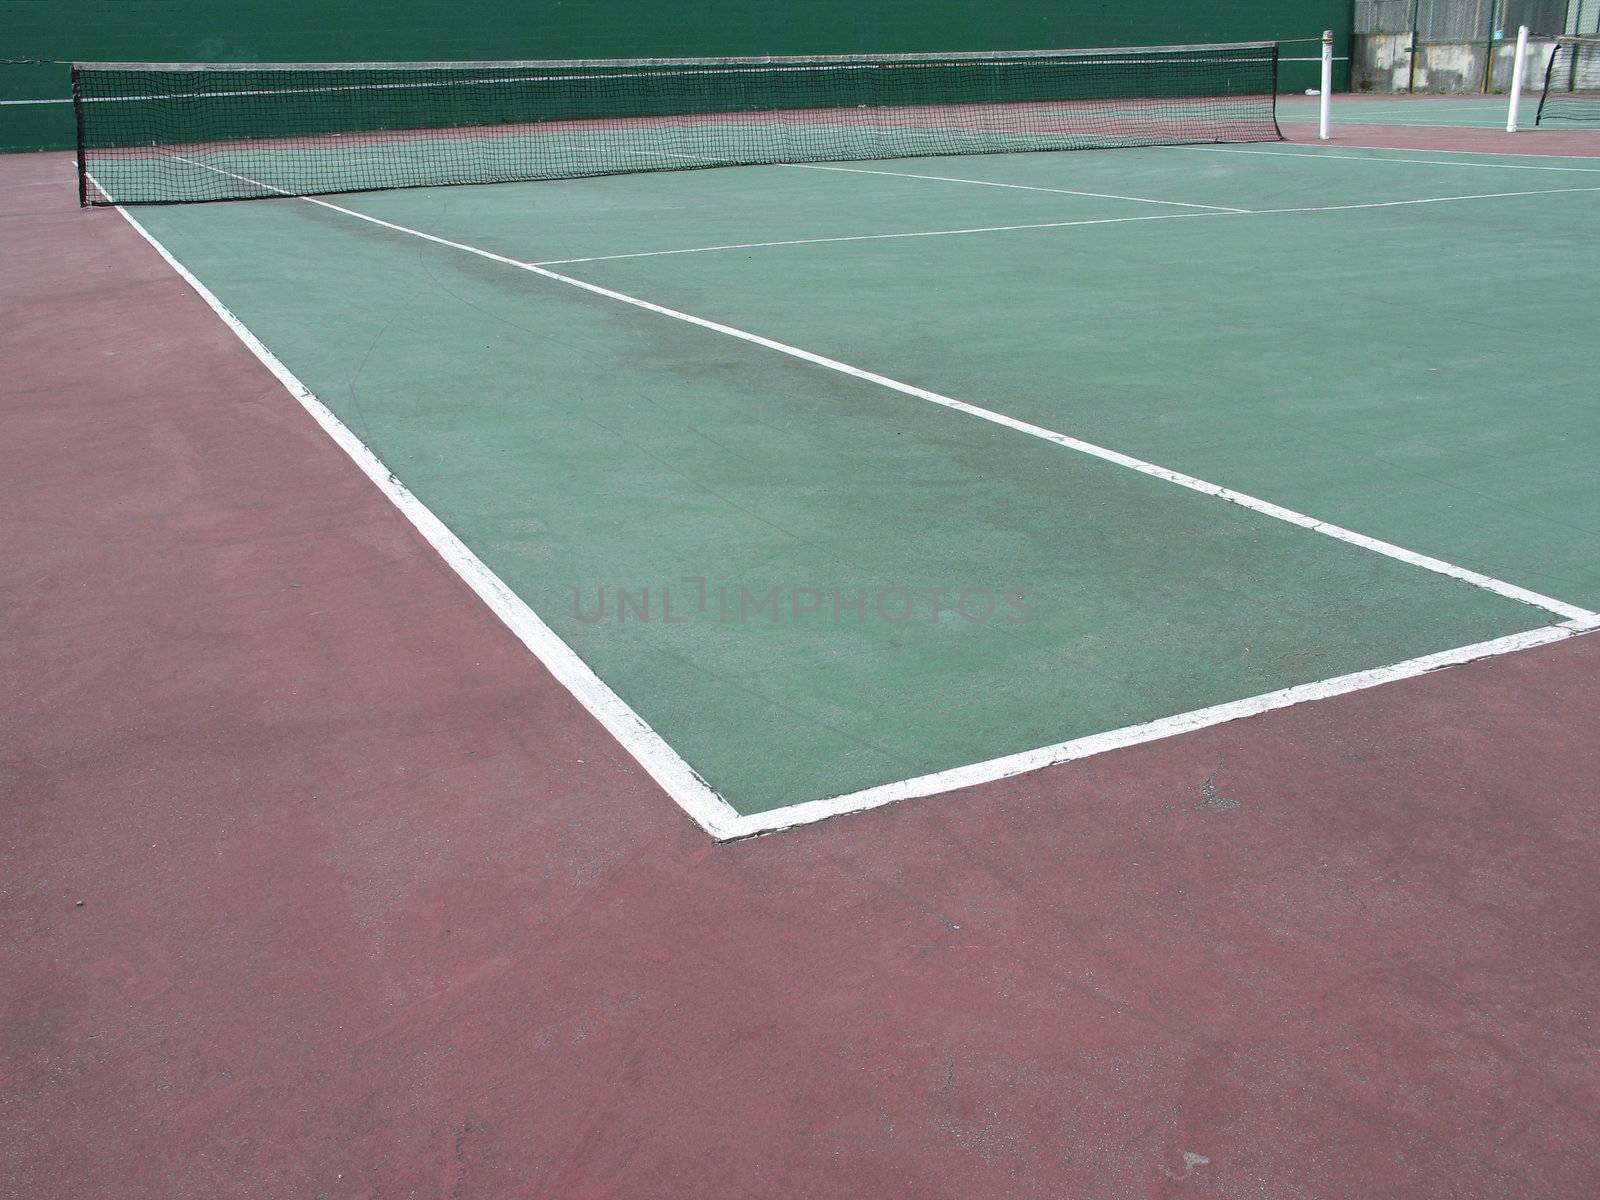 green tennis court by mmm